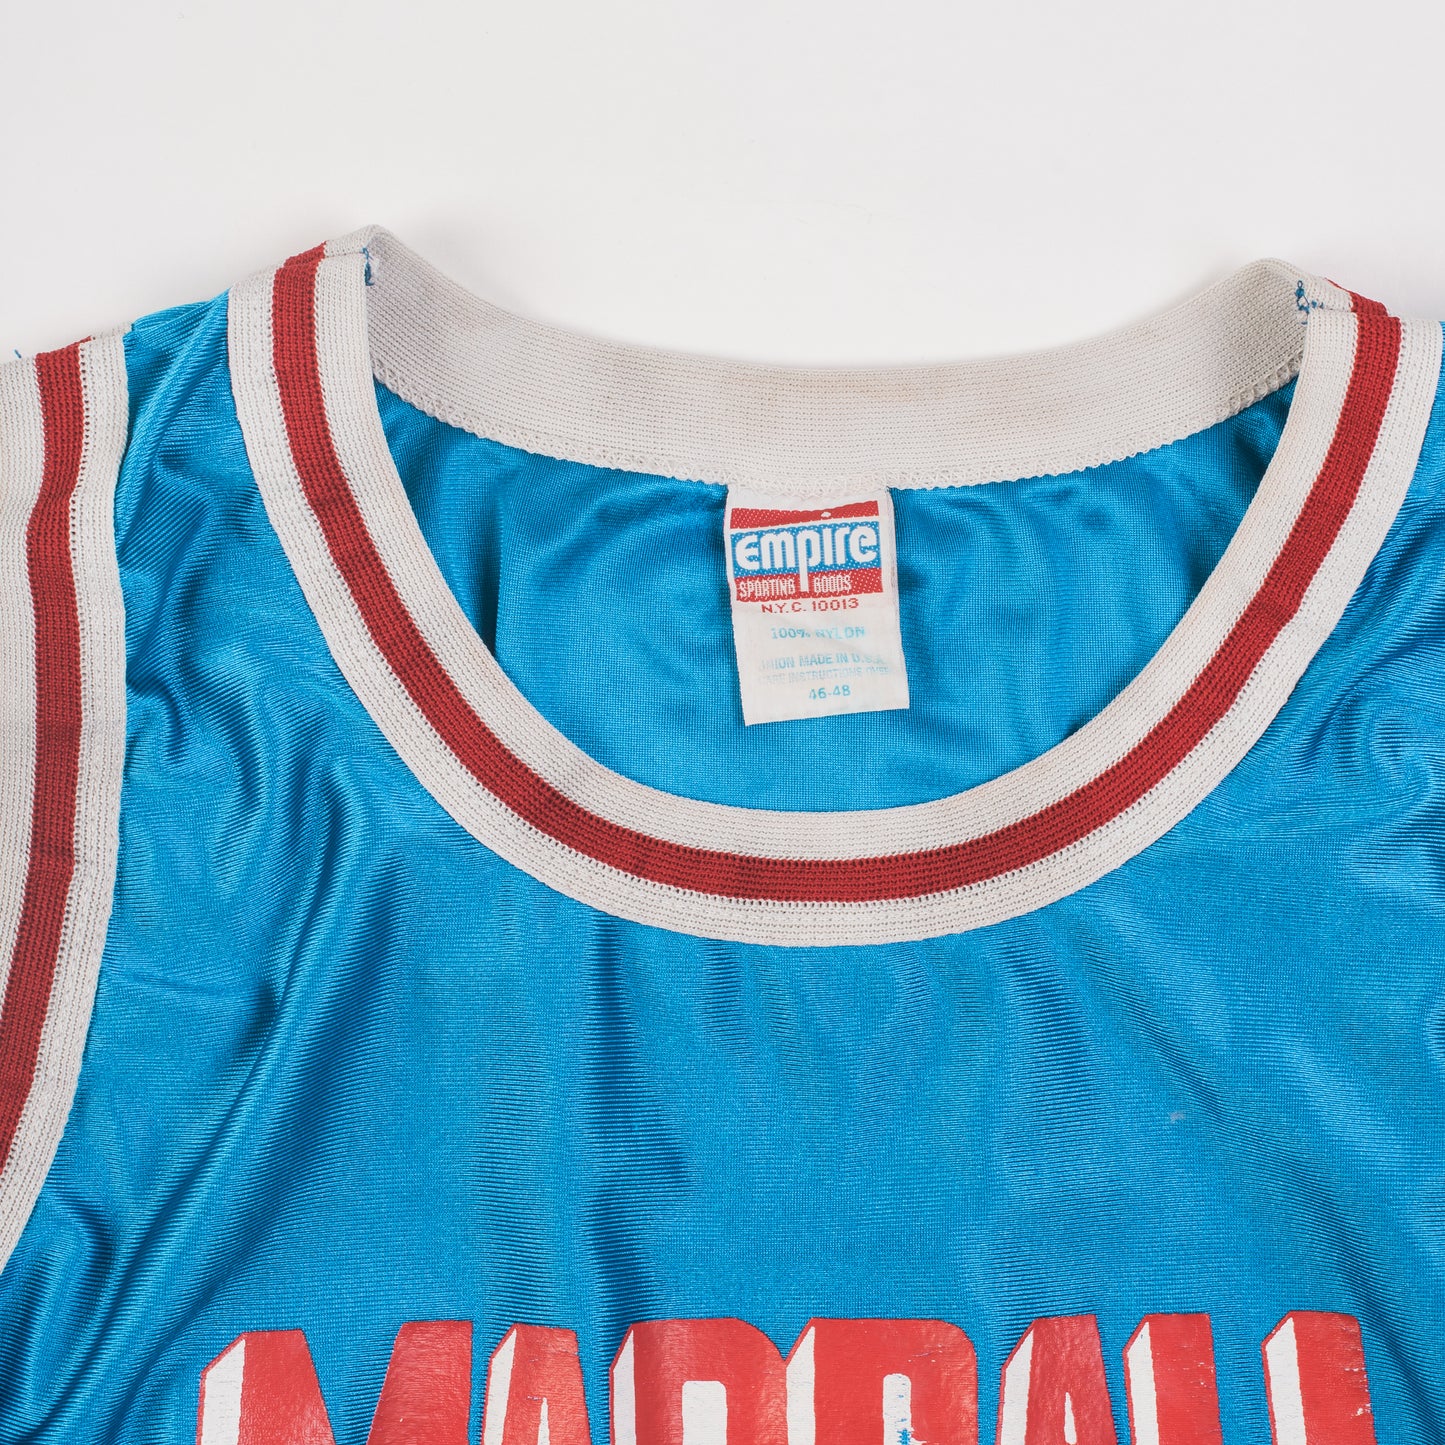 Vintage 90’s Madball Basketball Jersey